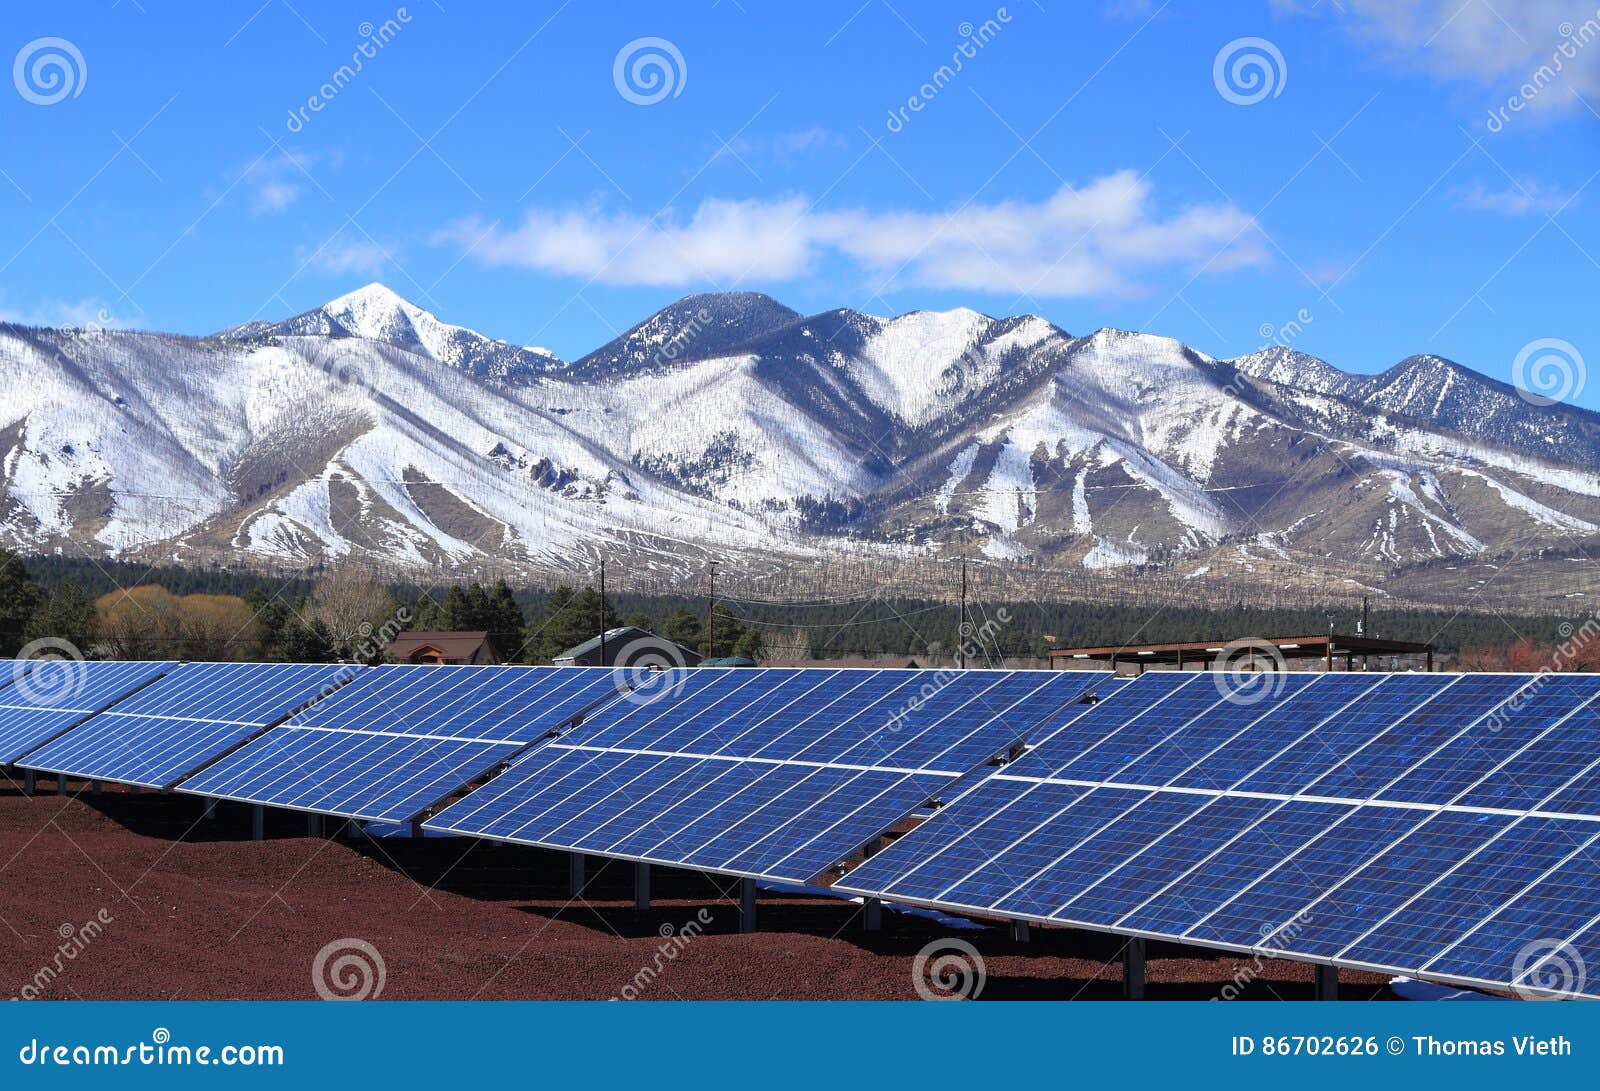 solar power plant at the foot of san francisco peaks - flagstaff, arizona/usa